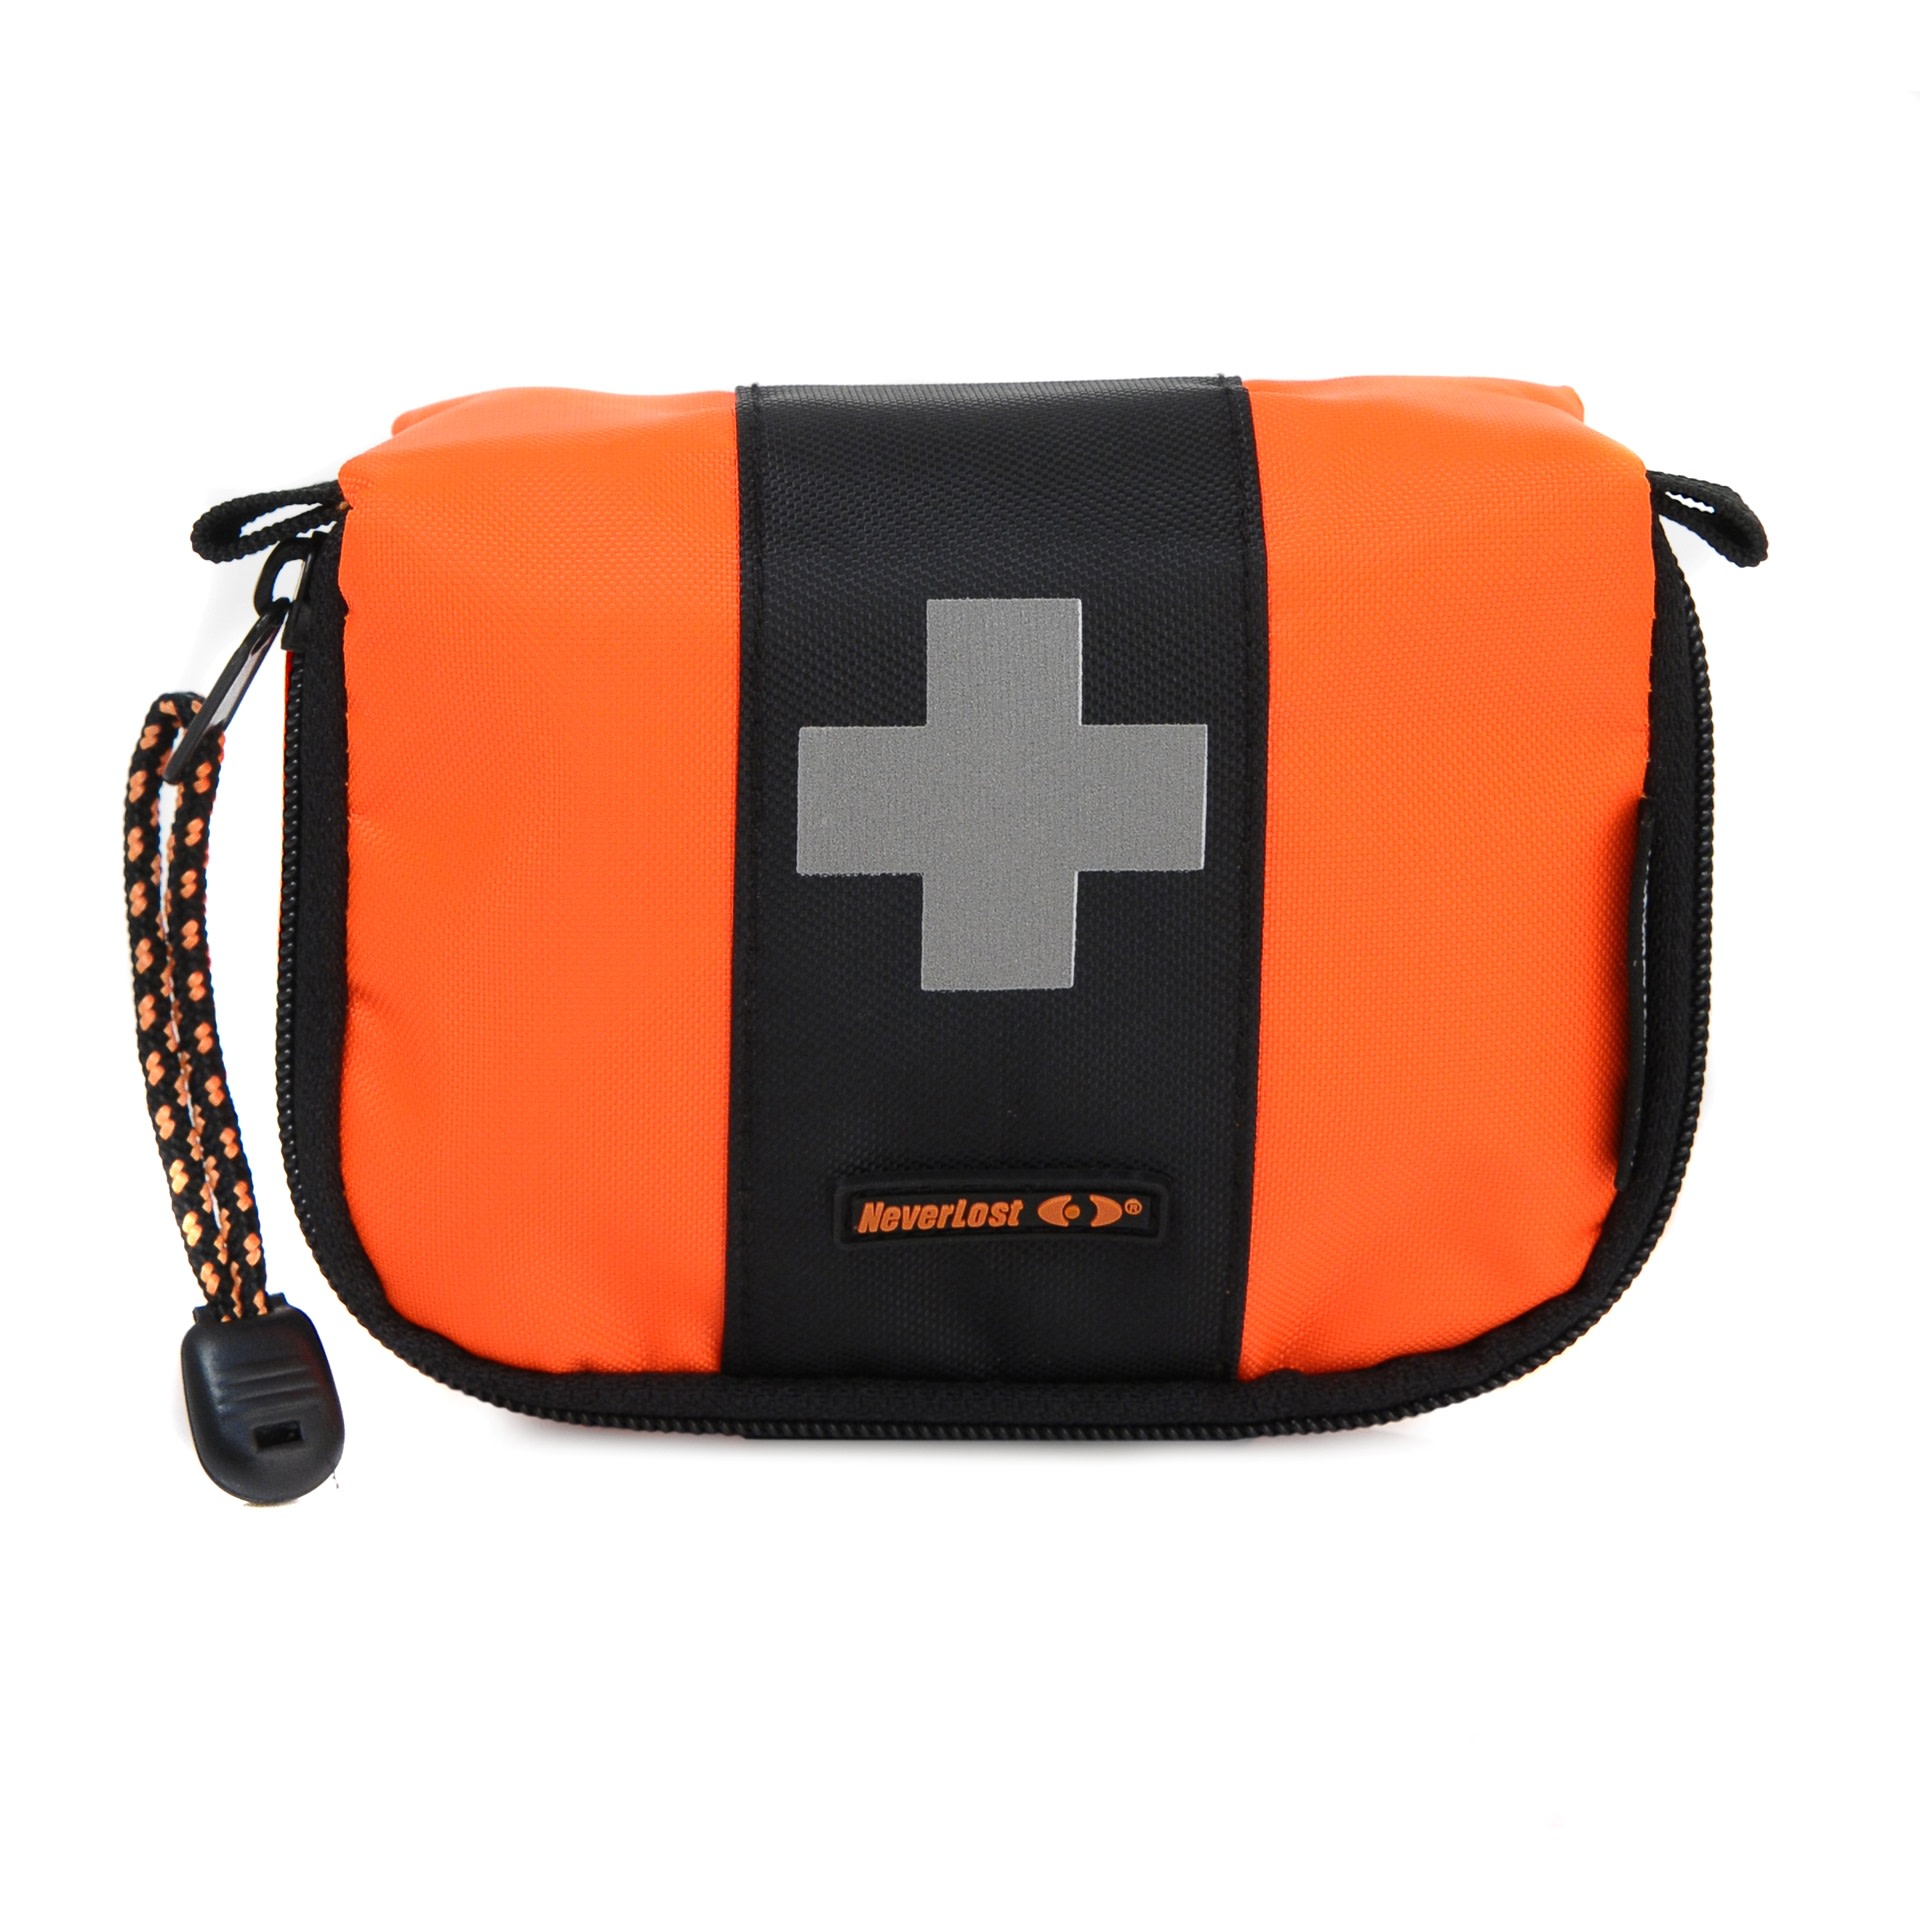 Never Lost First Aid Kit Basic Black/Orange